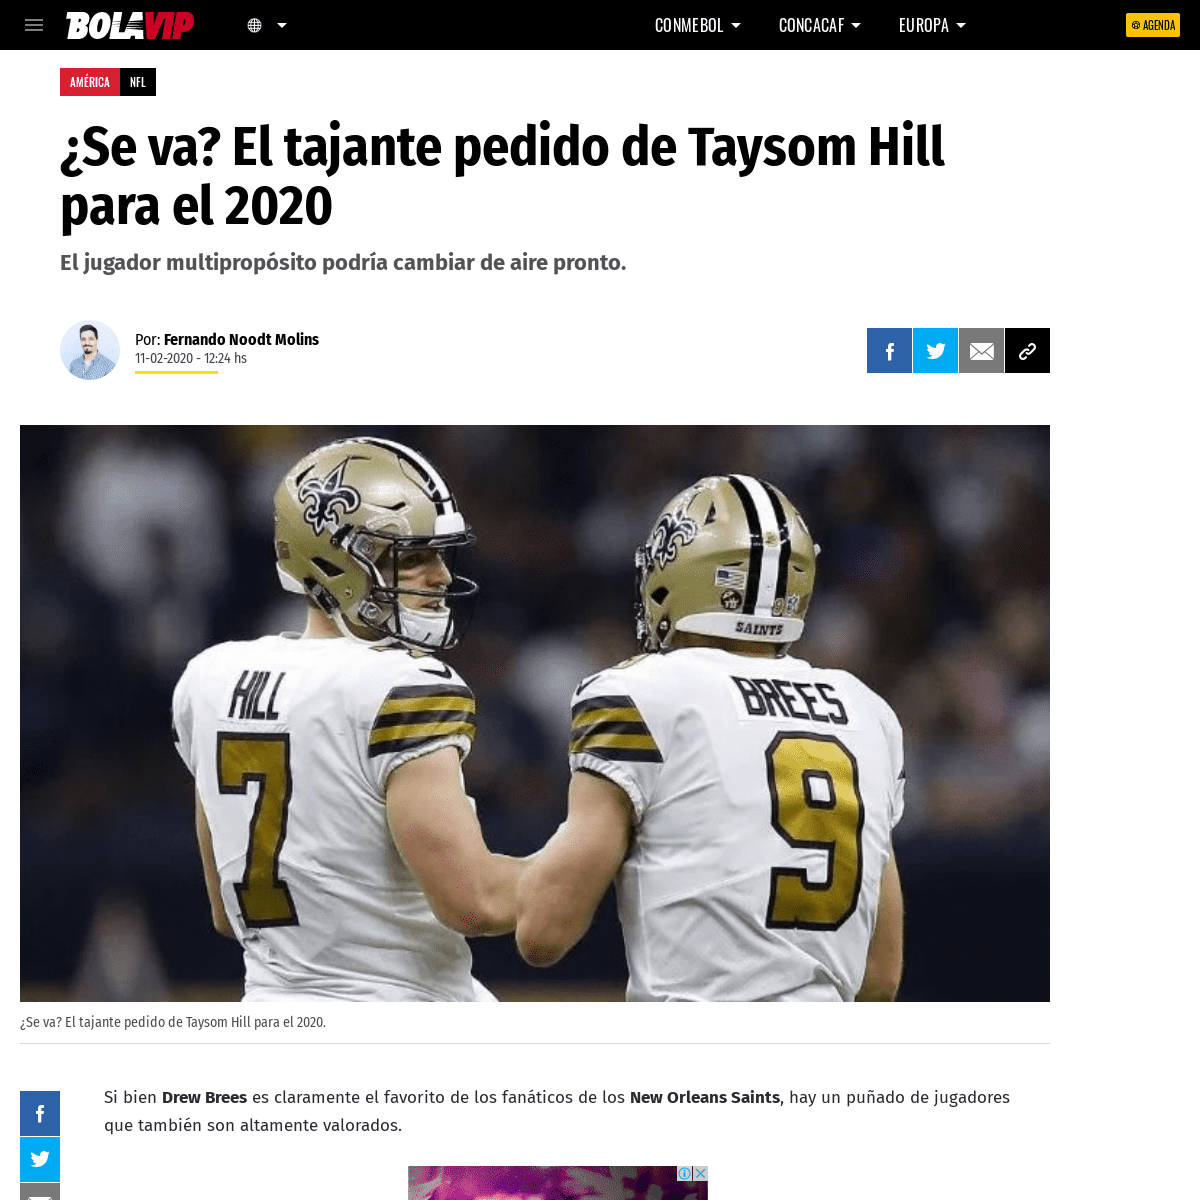 A complete backup of bolavip.com/america/se-va-tajante-pedido-Taysom-Hill-New-Orleans-Saints-2020-NFL-20200211-0054.html